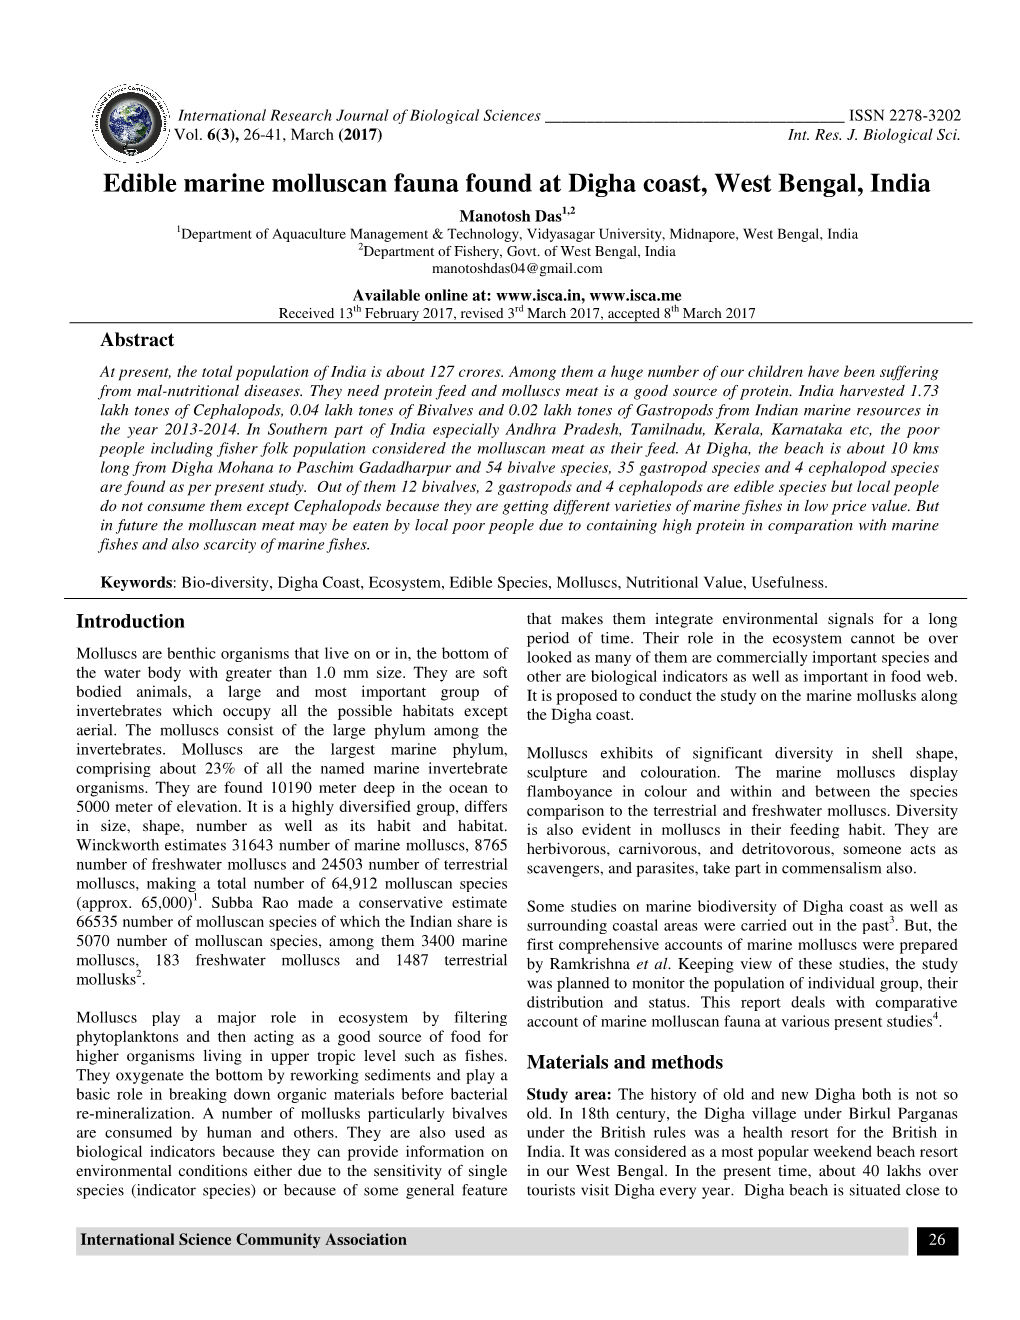 E Molluscan Fauna Found at Digha Coast, West Bengal